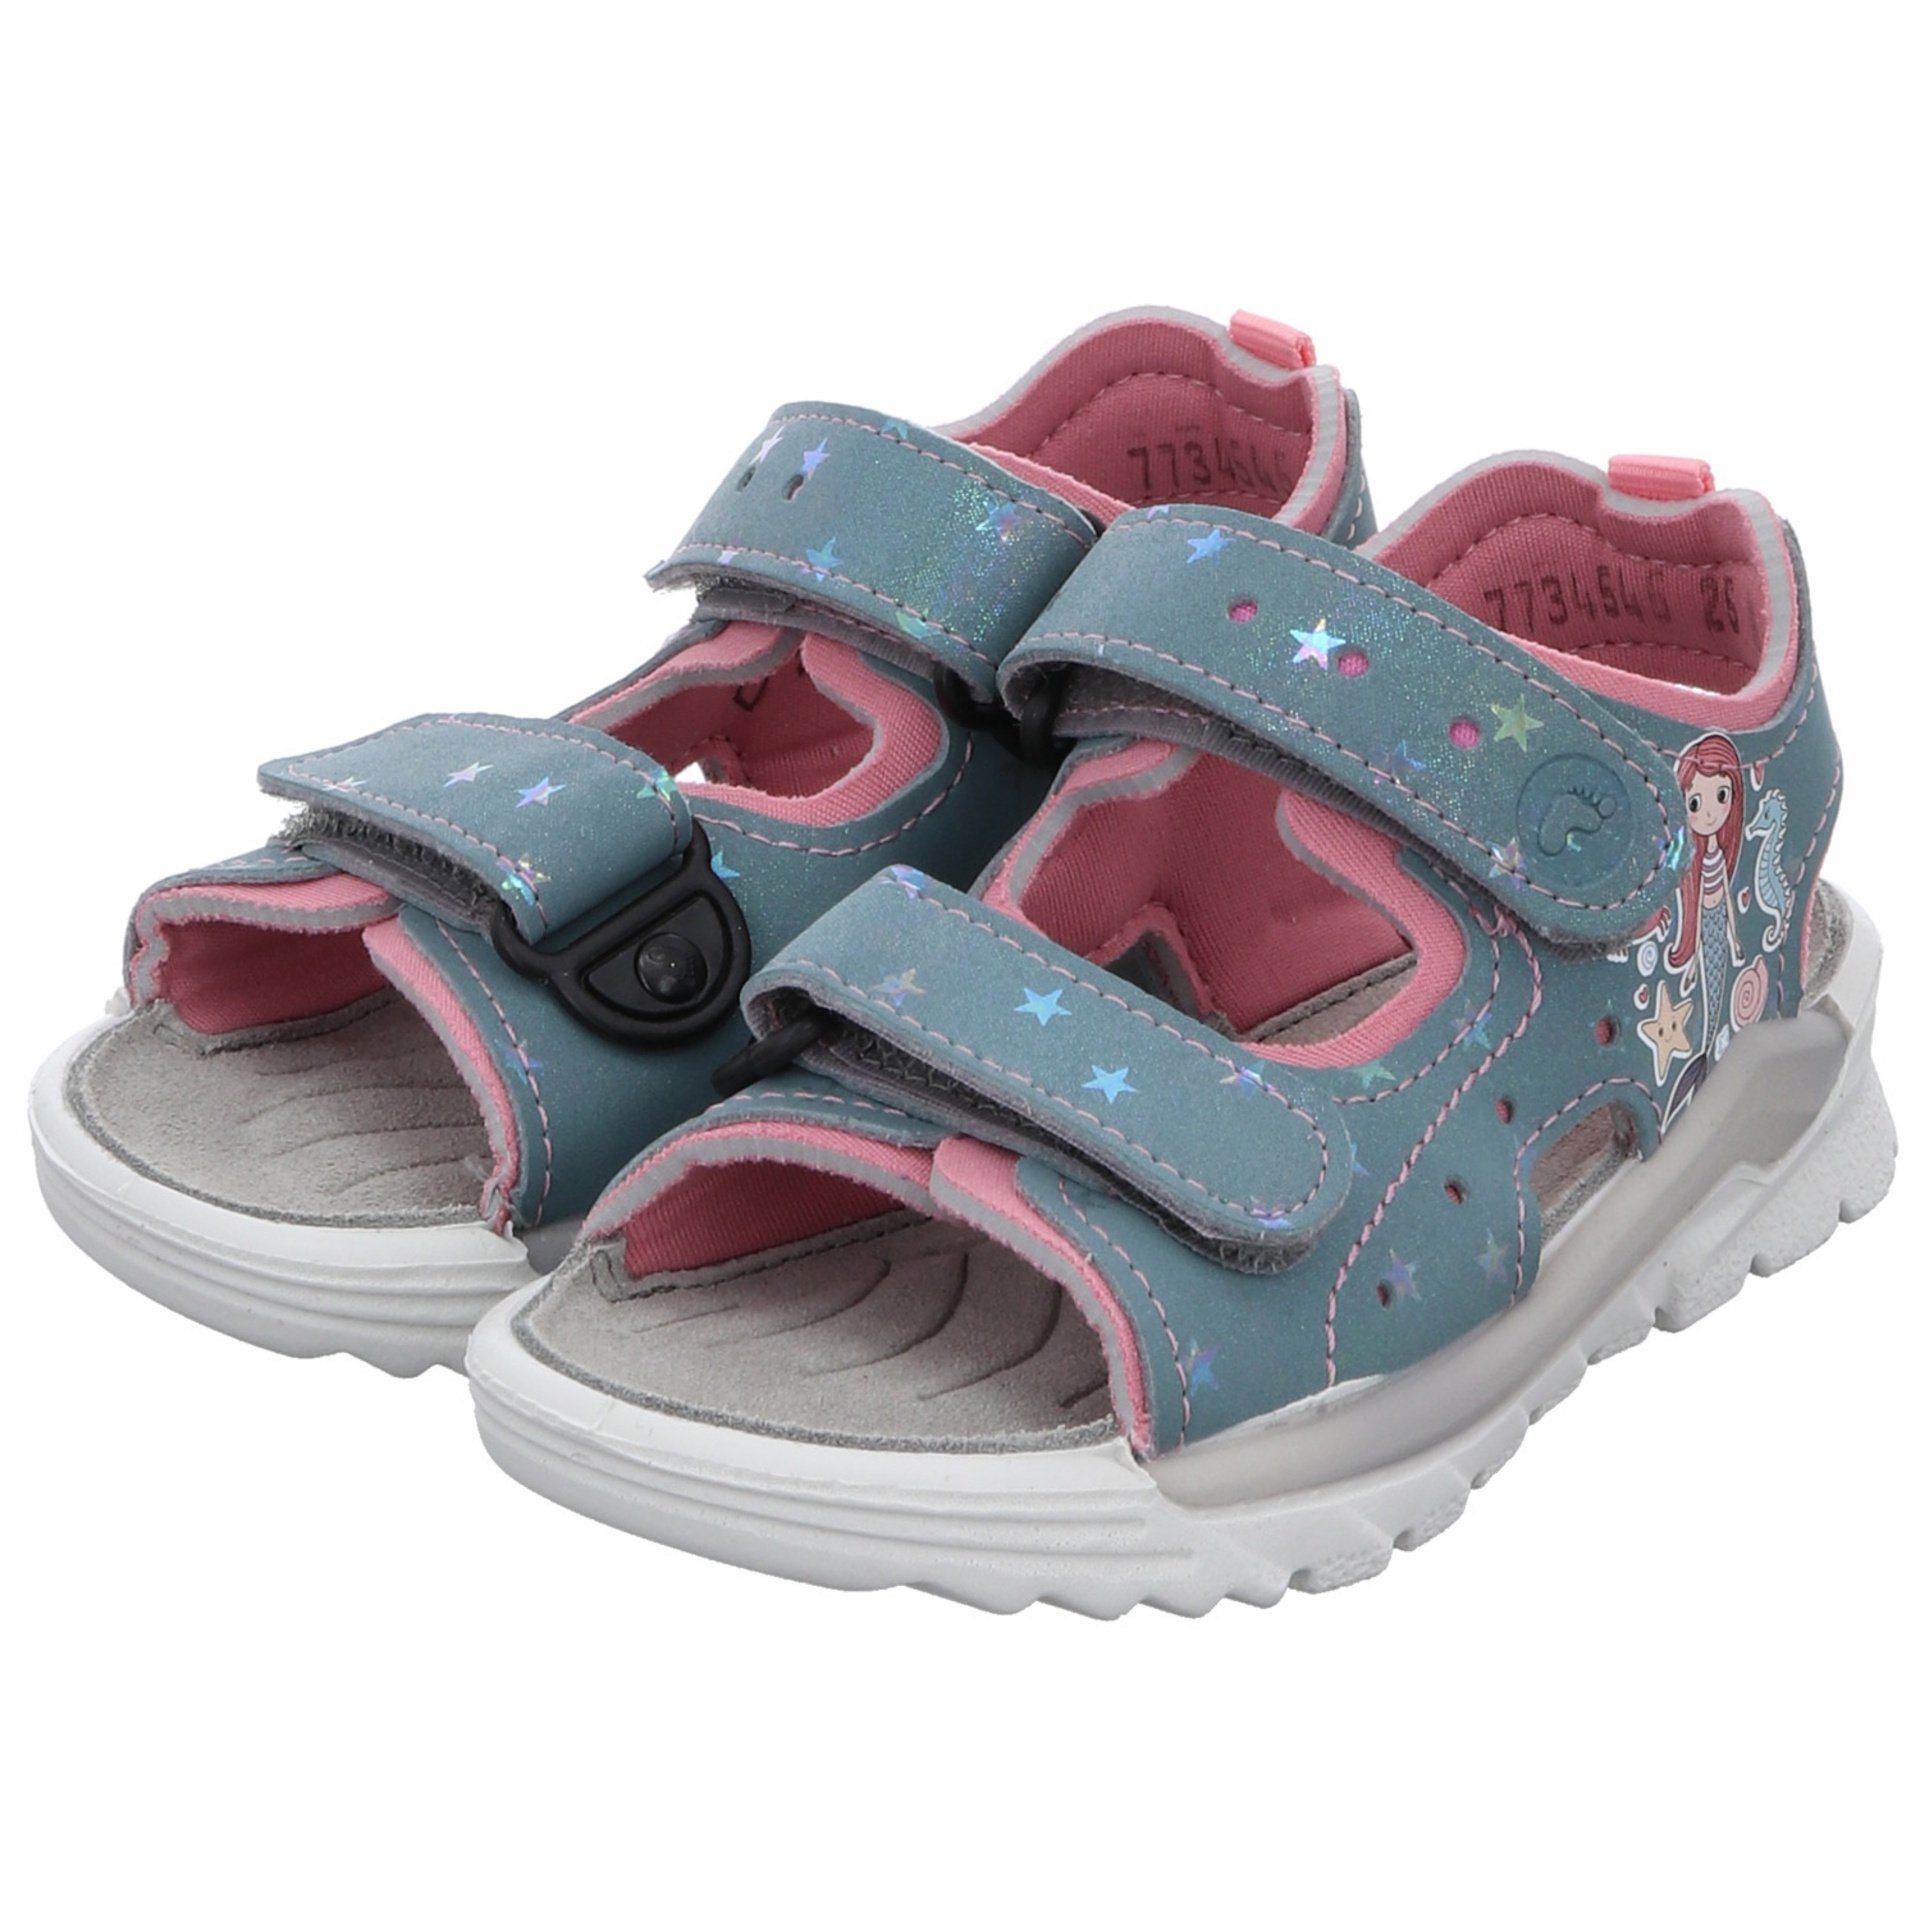 Sandale arctic/mallow Synthetikkombination Schuhe Sandalen Ricosta Sandale Surf Kinderschuhe (130) Mädchen